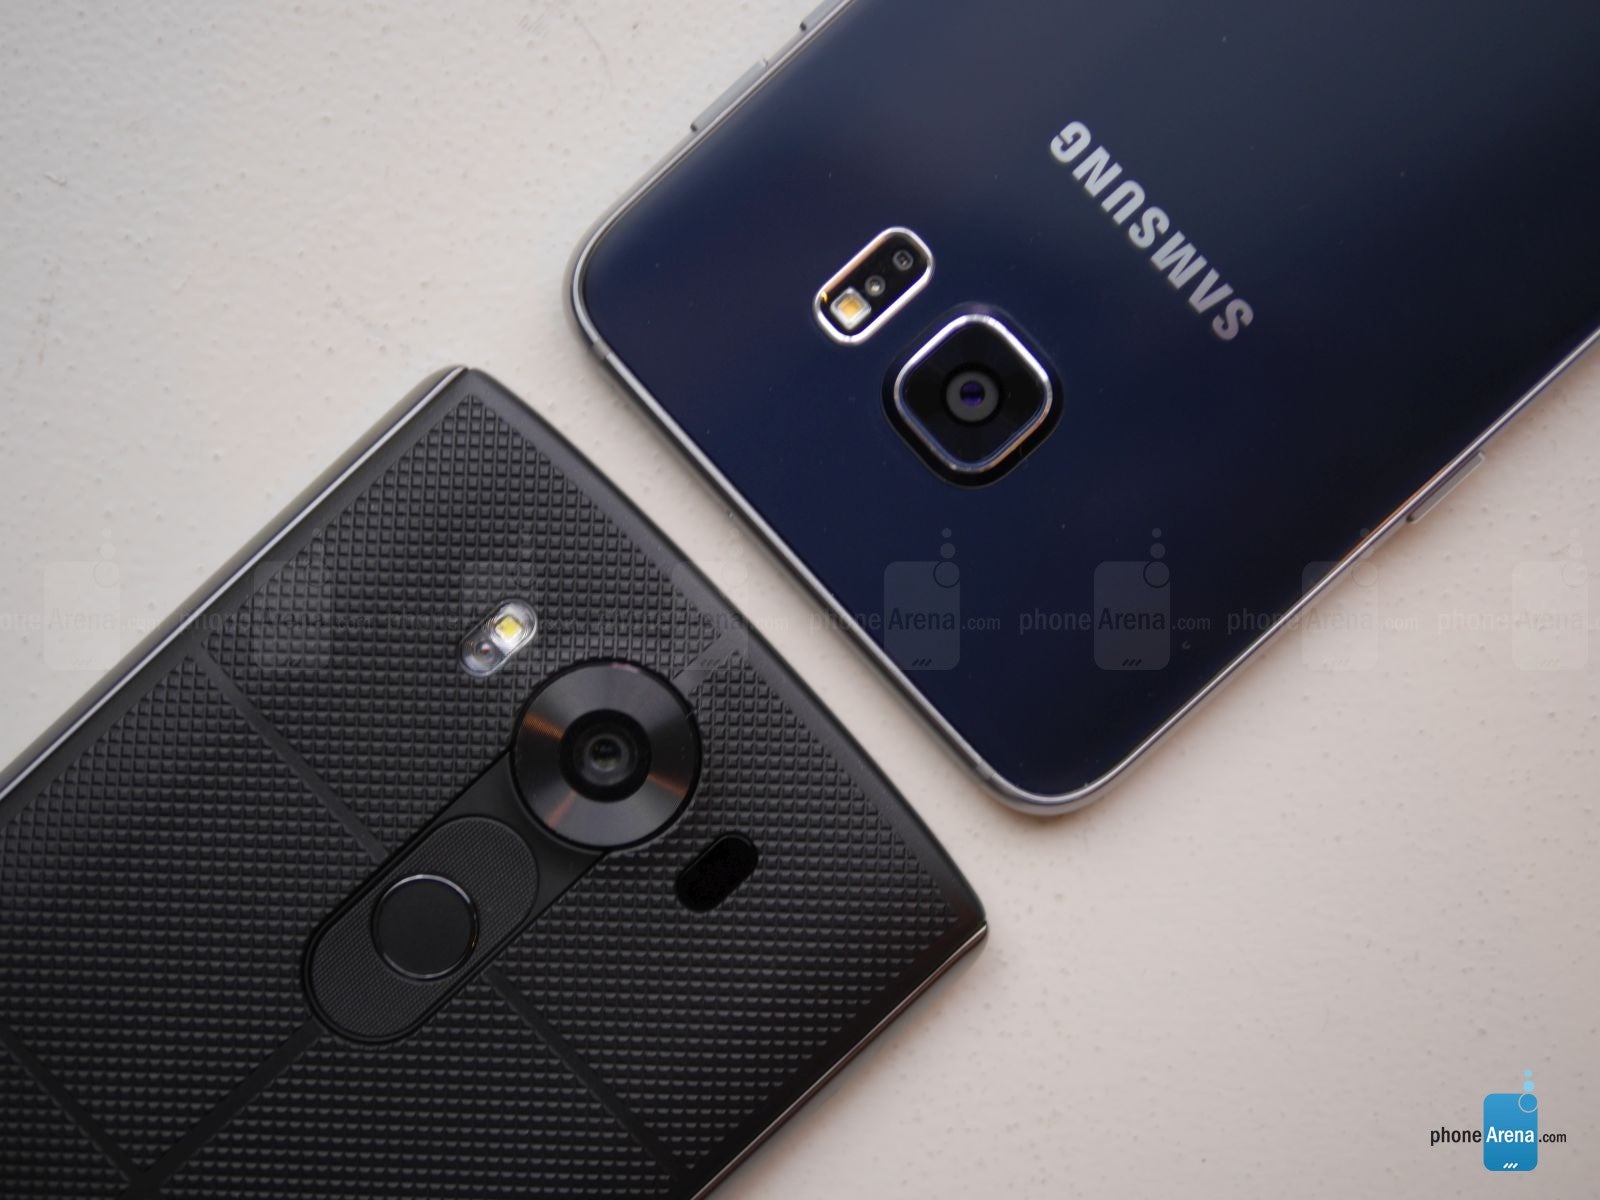 LG V10 vs Samsung Galaxy s6 edge+: first look